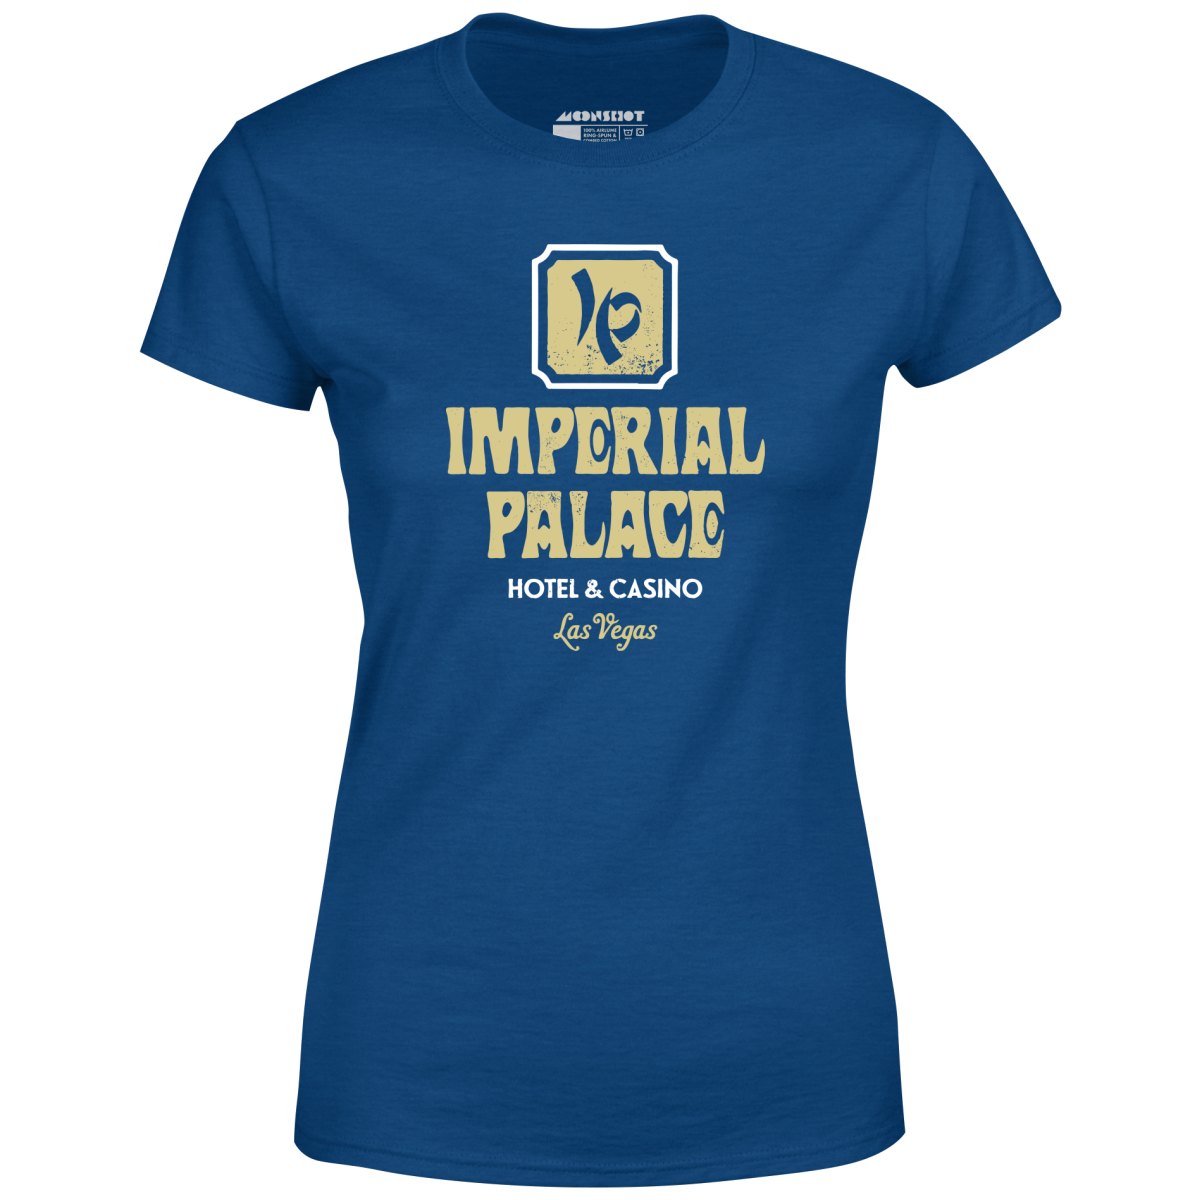 Imperial Palace Hotel & Casino - Vintage Las Vegas - Women's T-Shirt